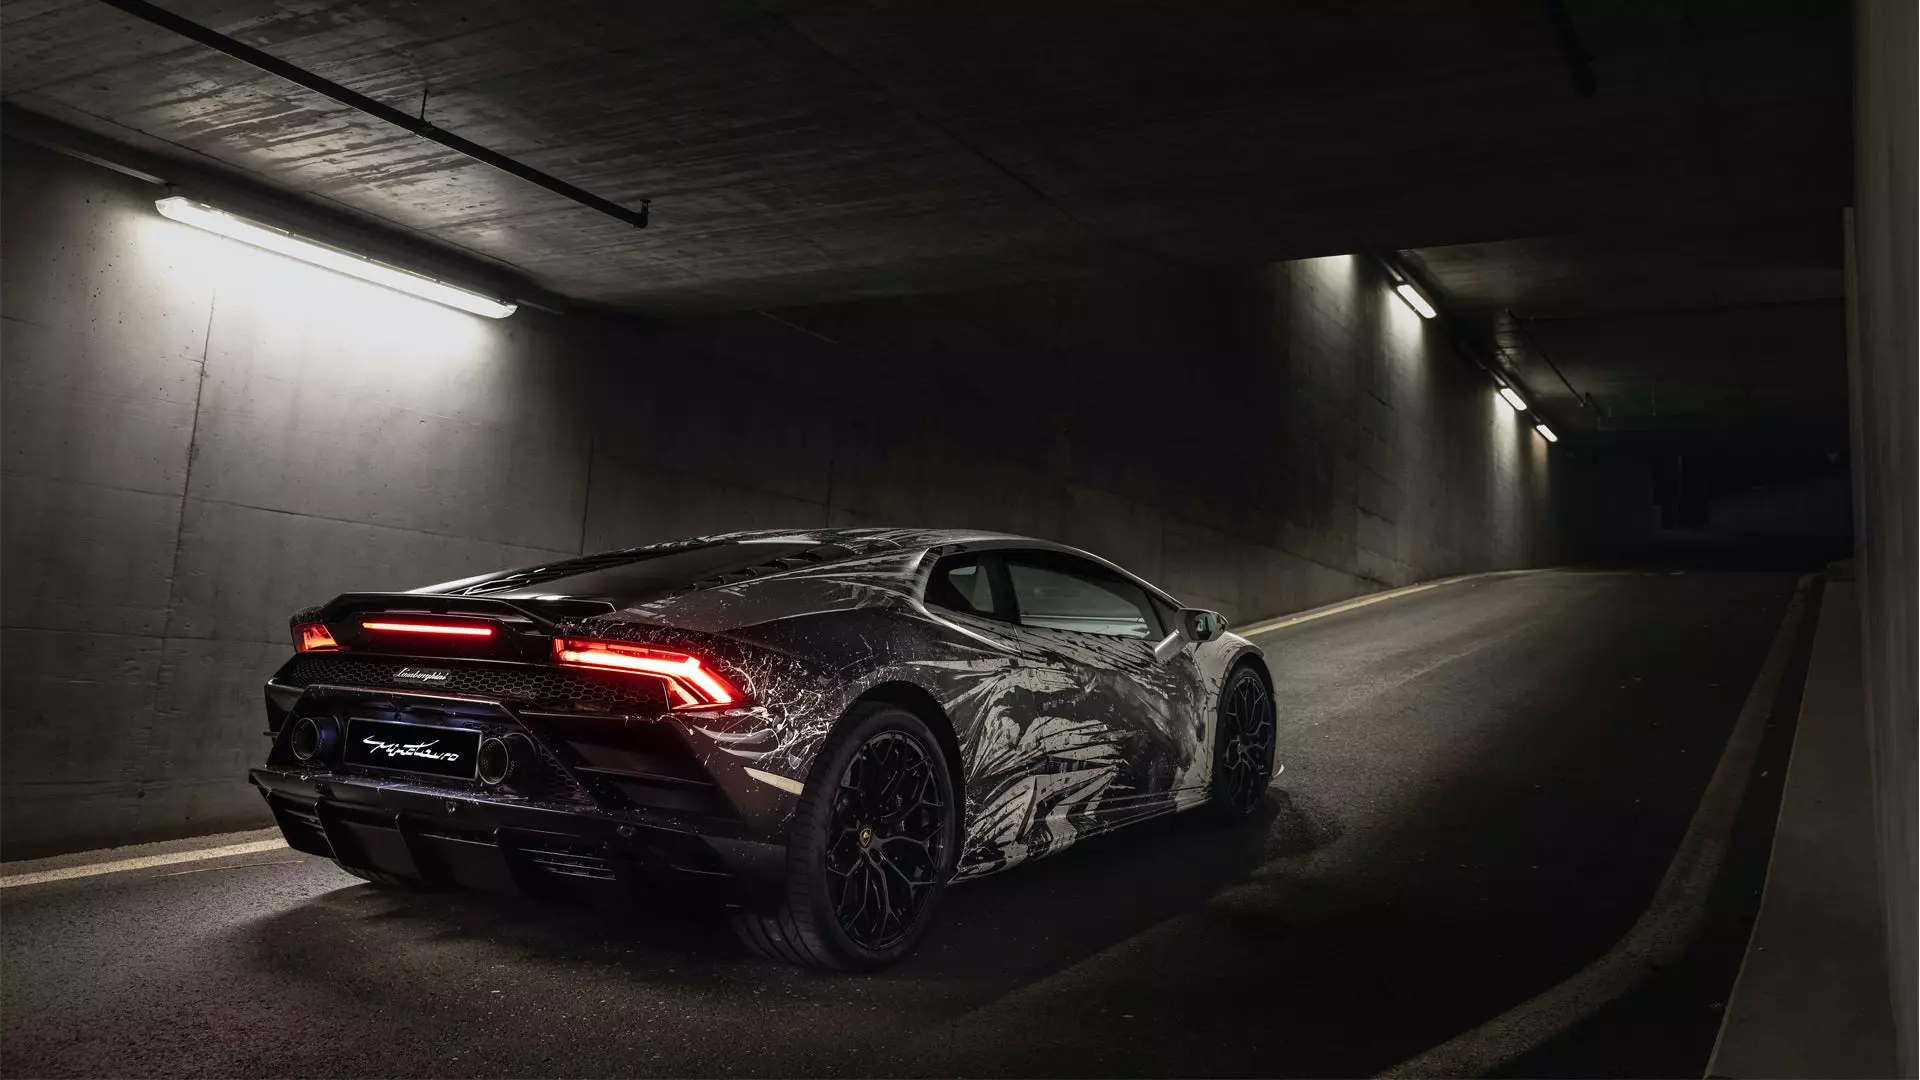 This Angsty Lamborghini Would Make a Good Backup Batmobile | Autance